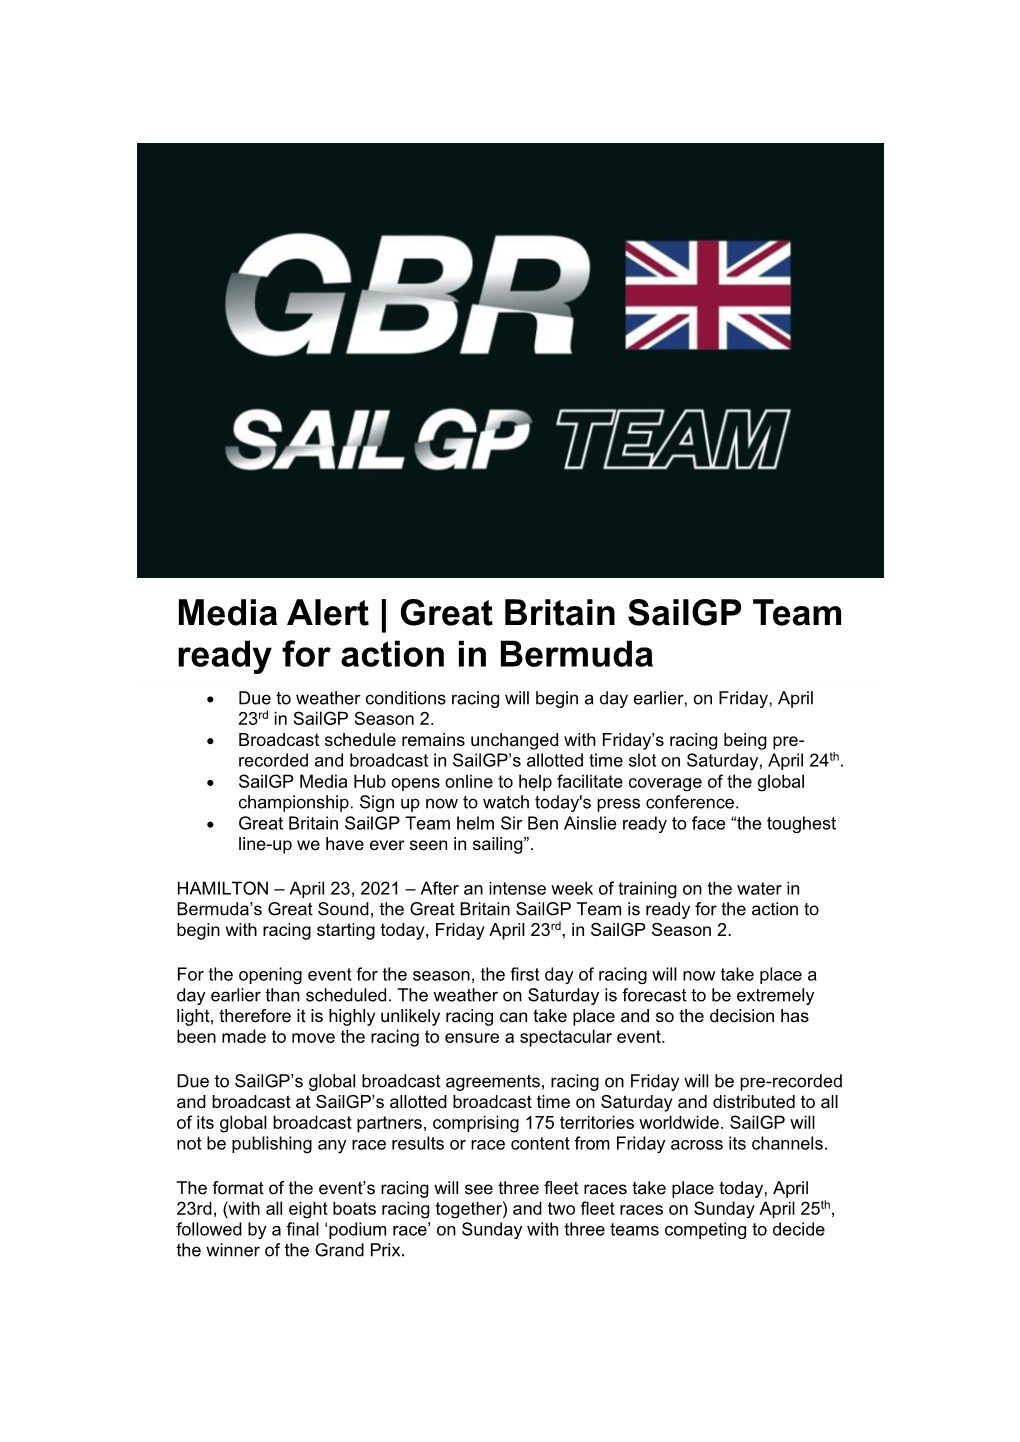 Media Alert | Great Britain Sailgp Team Ready for Action in Bermuda